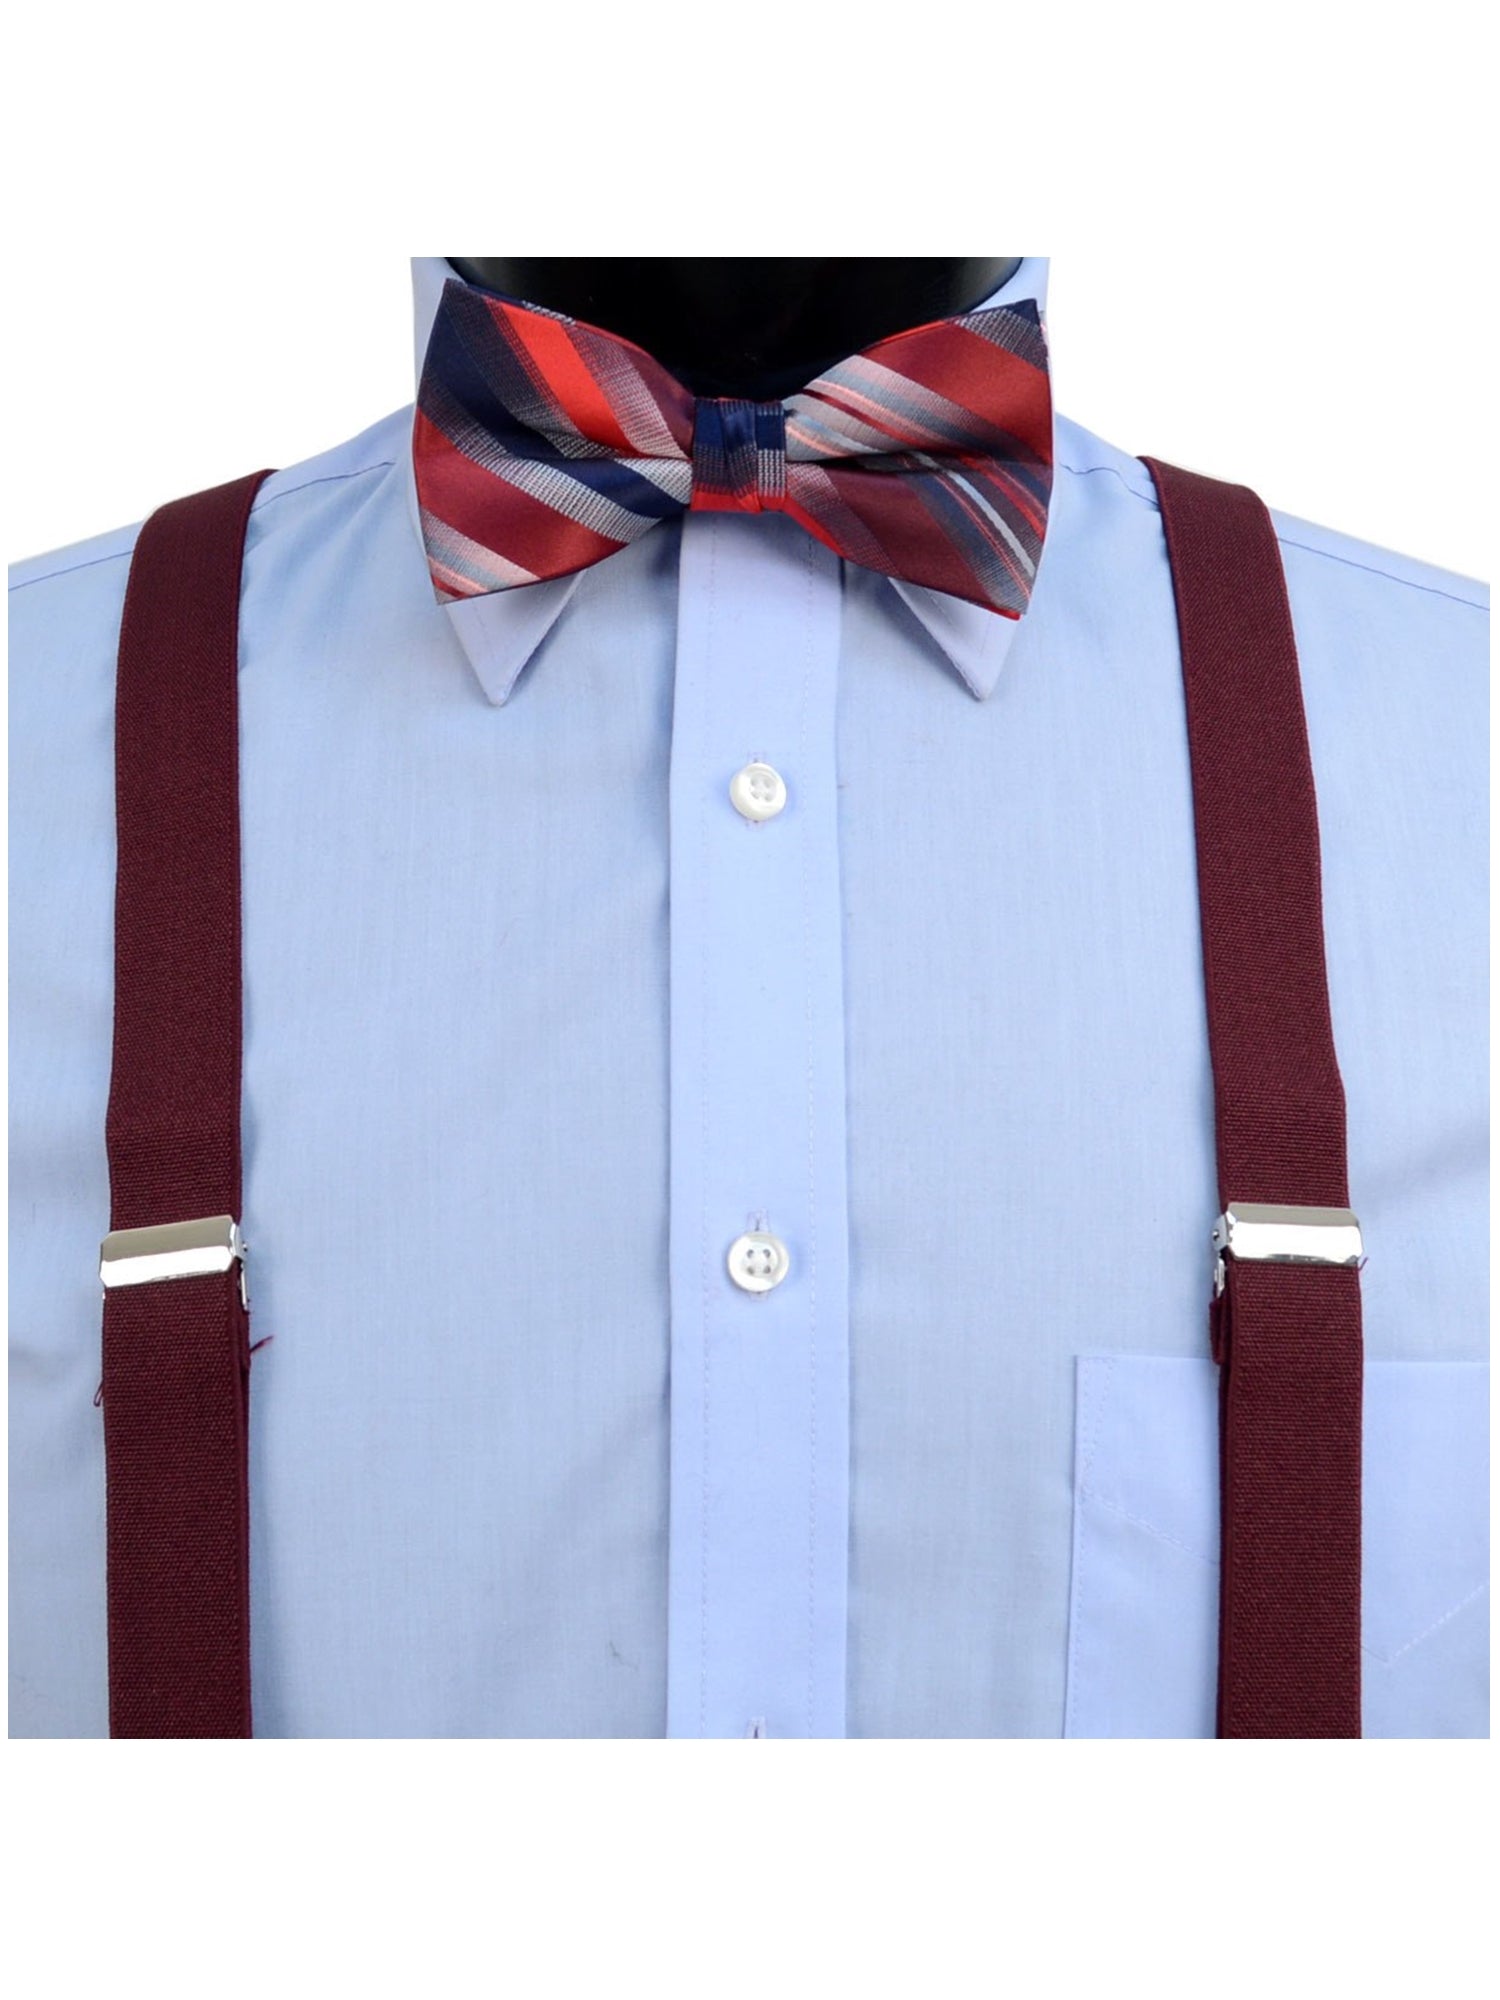 Men's 3 PC Clip-on Suspenders, Bow Tie & Hanky Sets Men's Solid Color Bow Tie TheDapperTie   